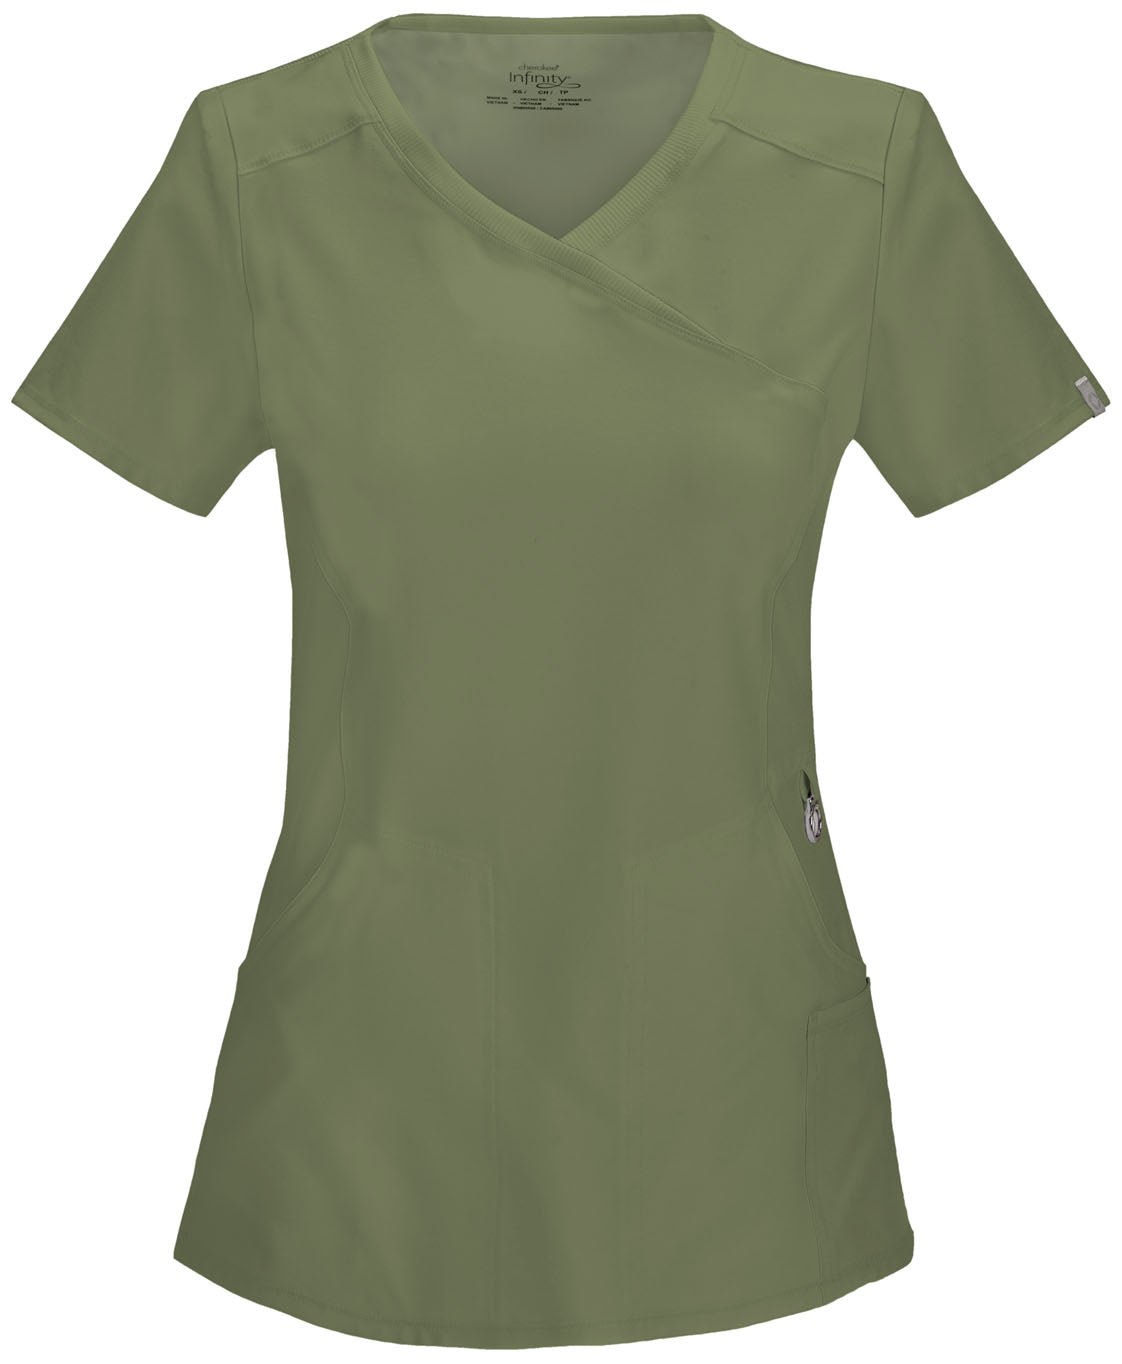 women's medical uniform tops, fashionable nurses uniforms, Women's Cherokee Infinity Mock Wrap Top